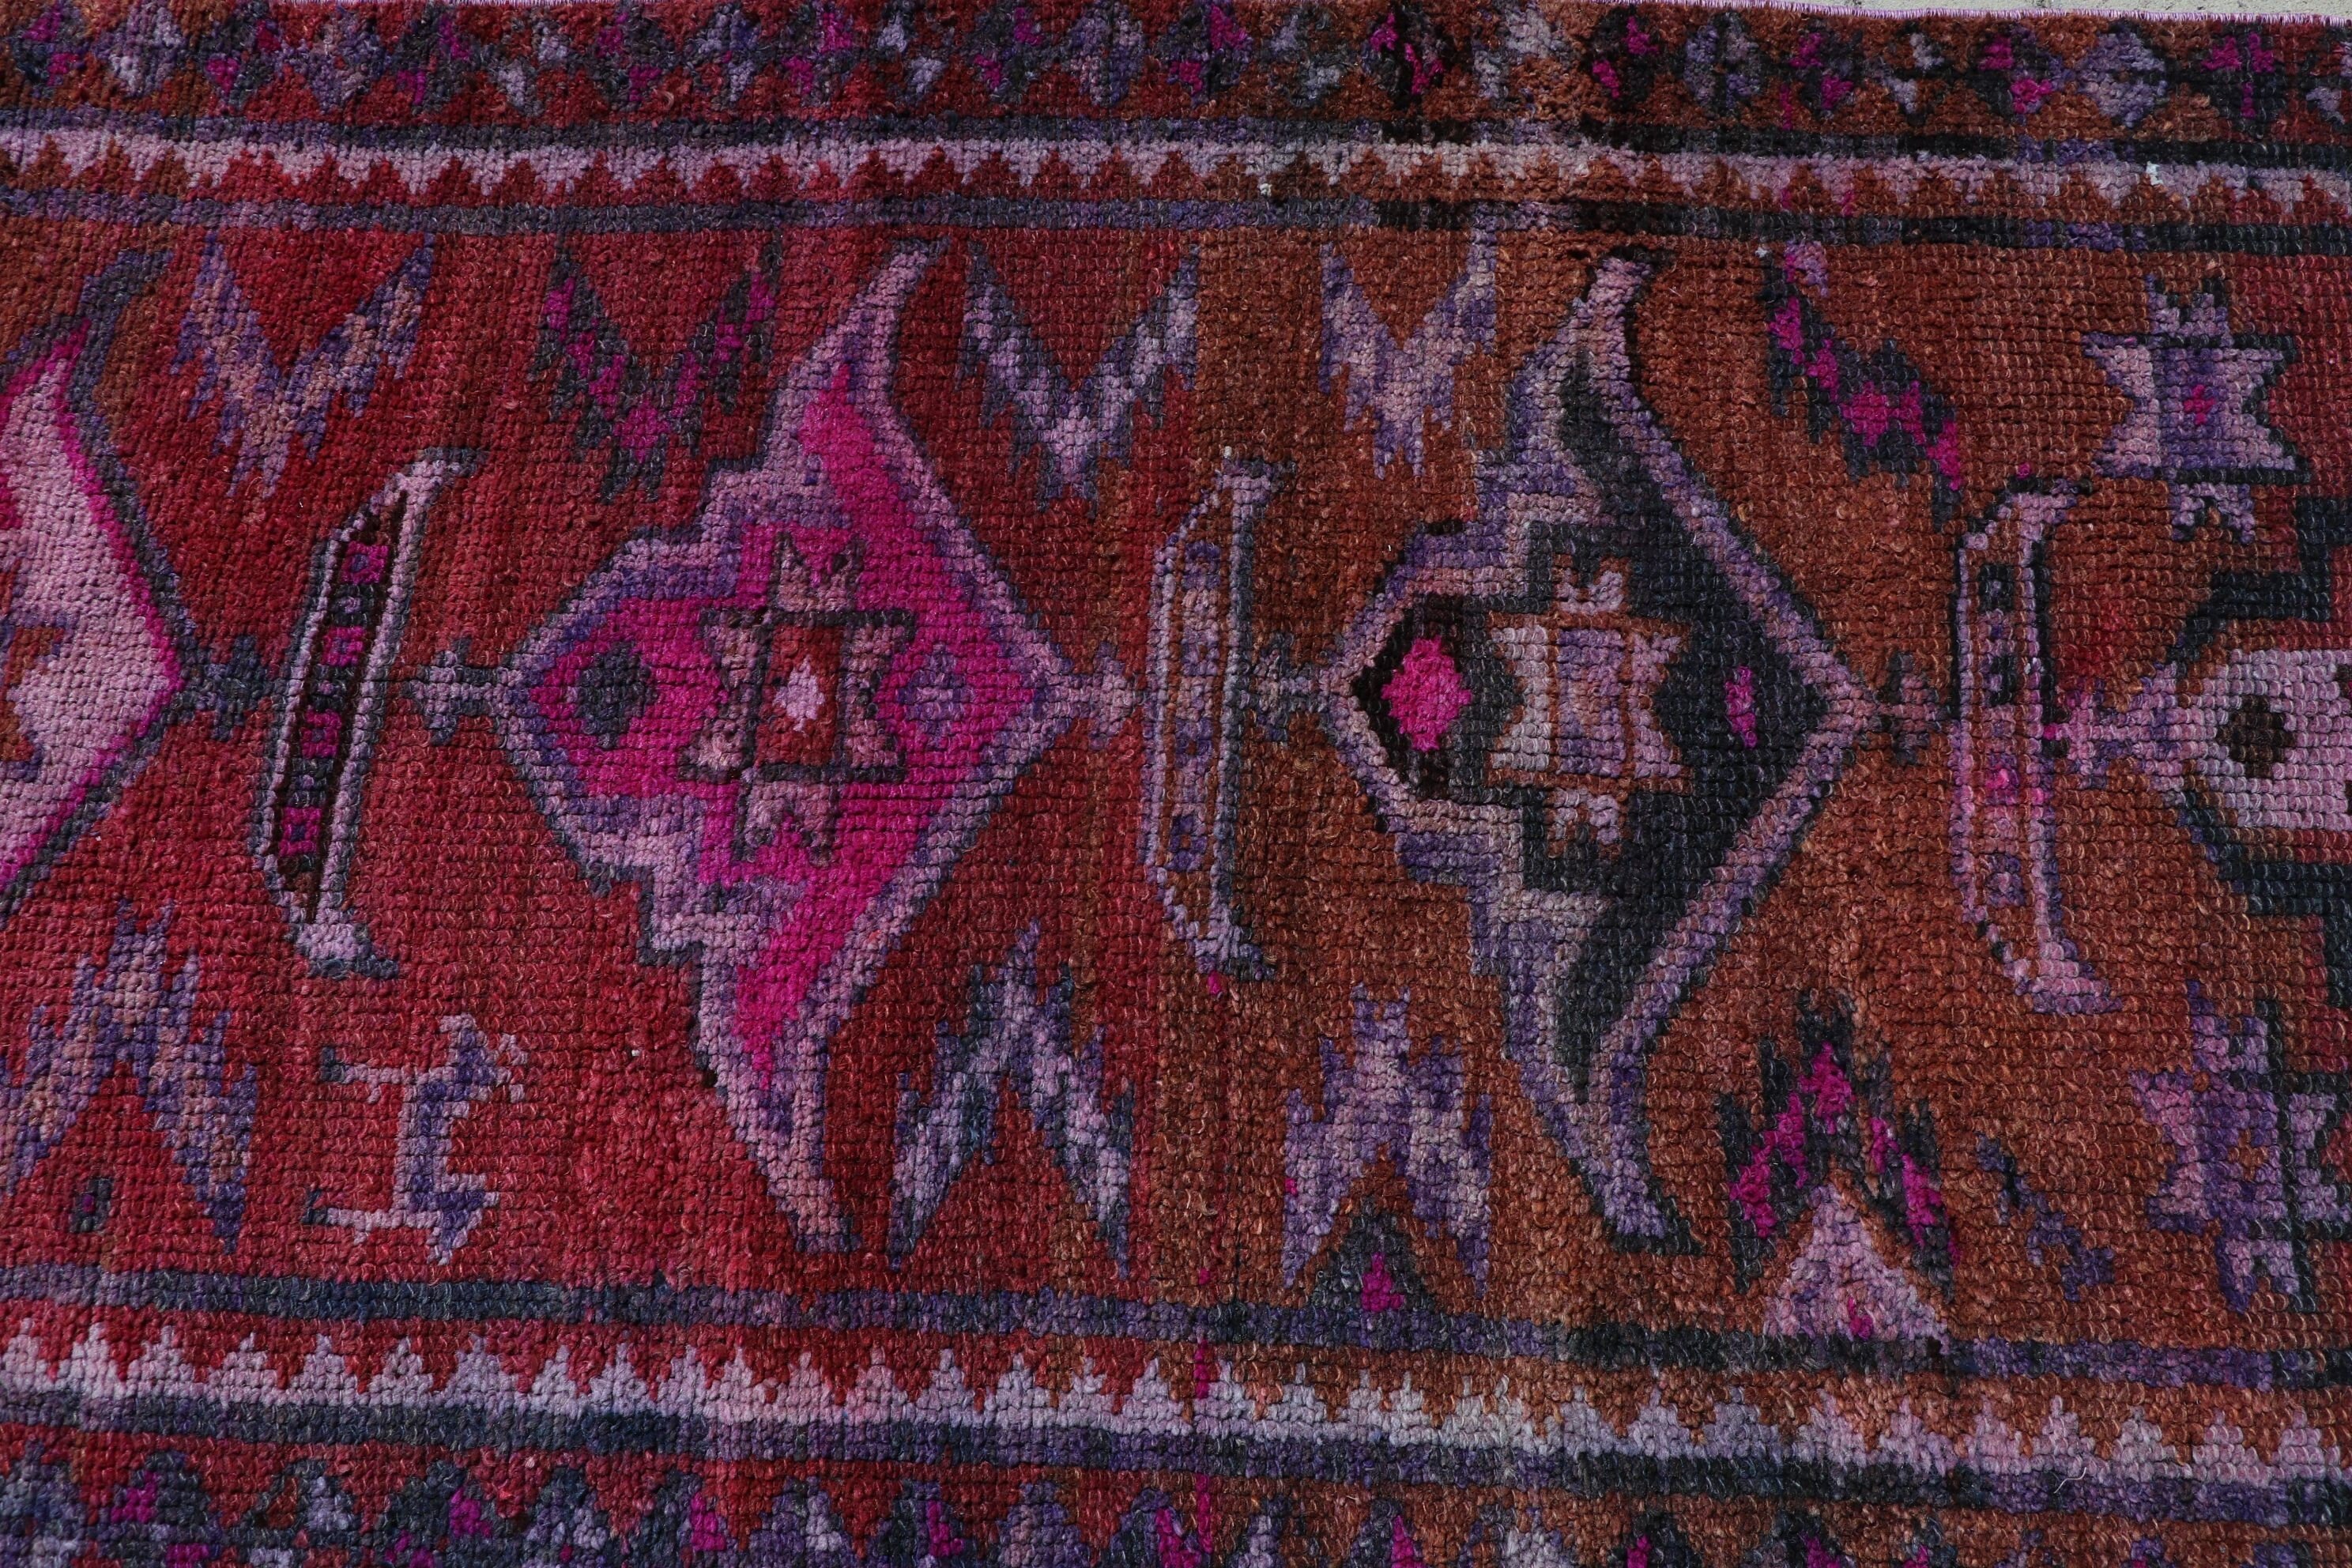 Anatolian Rugs, Turkish Rug, 2.8x8.4 ft Runner Rugs, Art Rug, Rugs for Hallway, Moroccan Rug, Green Moroccan Rug, Corridor Rug, Vintage Rug